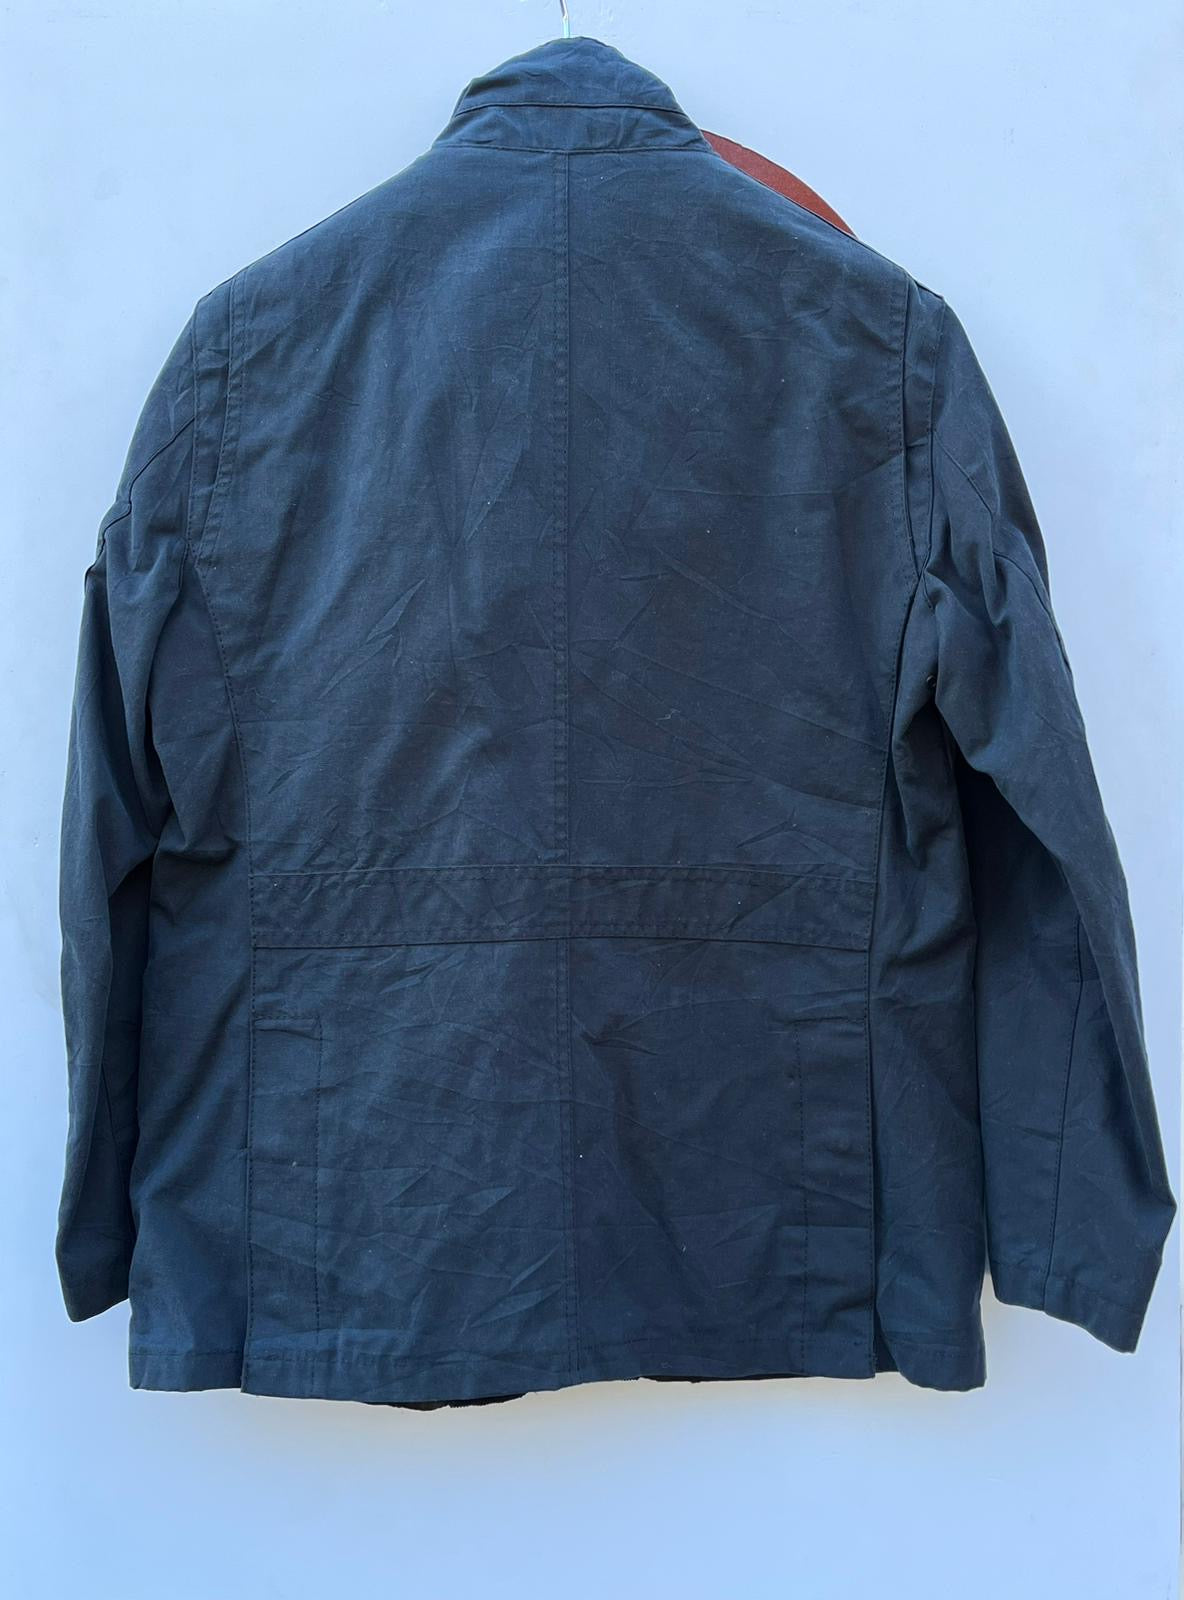 Giacca Barbour Uomo blu cerato Lutz Medium- Navy waxed cotton Jacket Size Medium